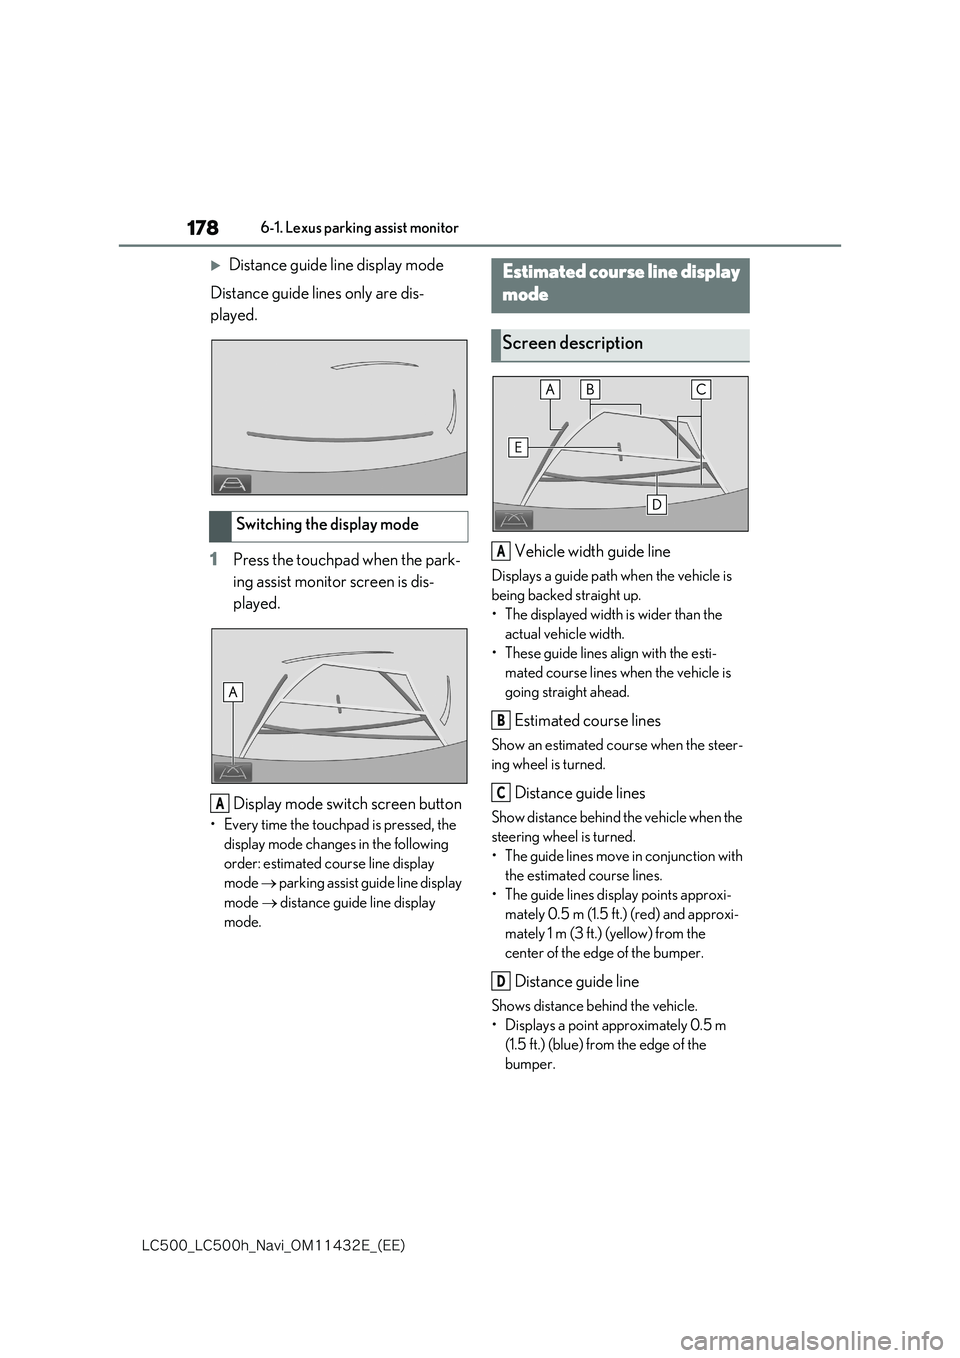 lexus LC500 2018  Navigation Manual 178
�-�$����@�-�$����I�@�/�B�W�J�@�0�.������&�@�	�&�&�

6-1. Lexus parking assist monitor
Distance guide line display mode 
Distance guide lines only are dis- 
played. 
1 Press the touch